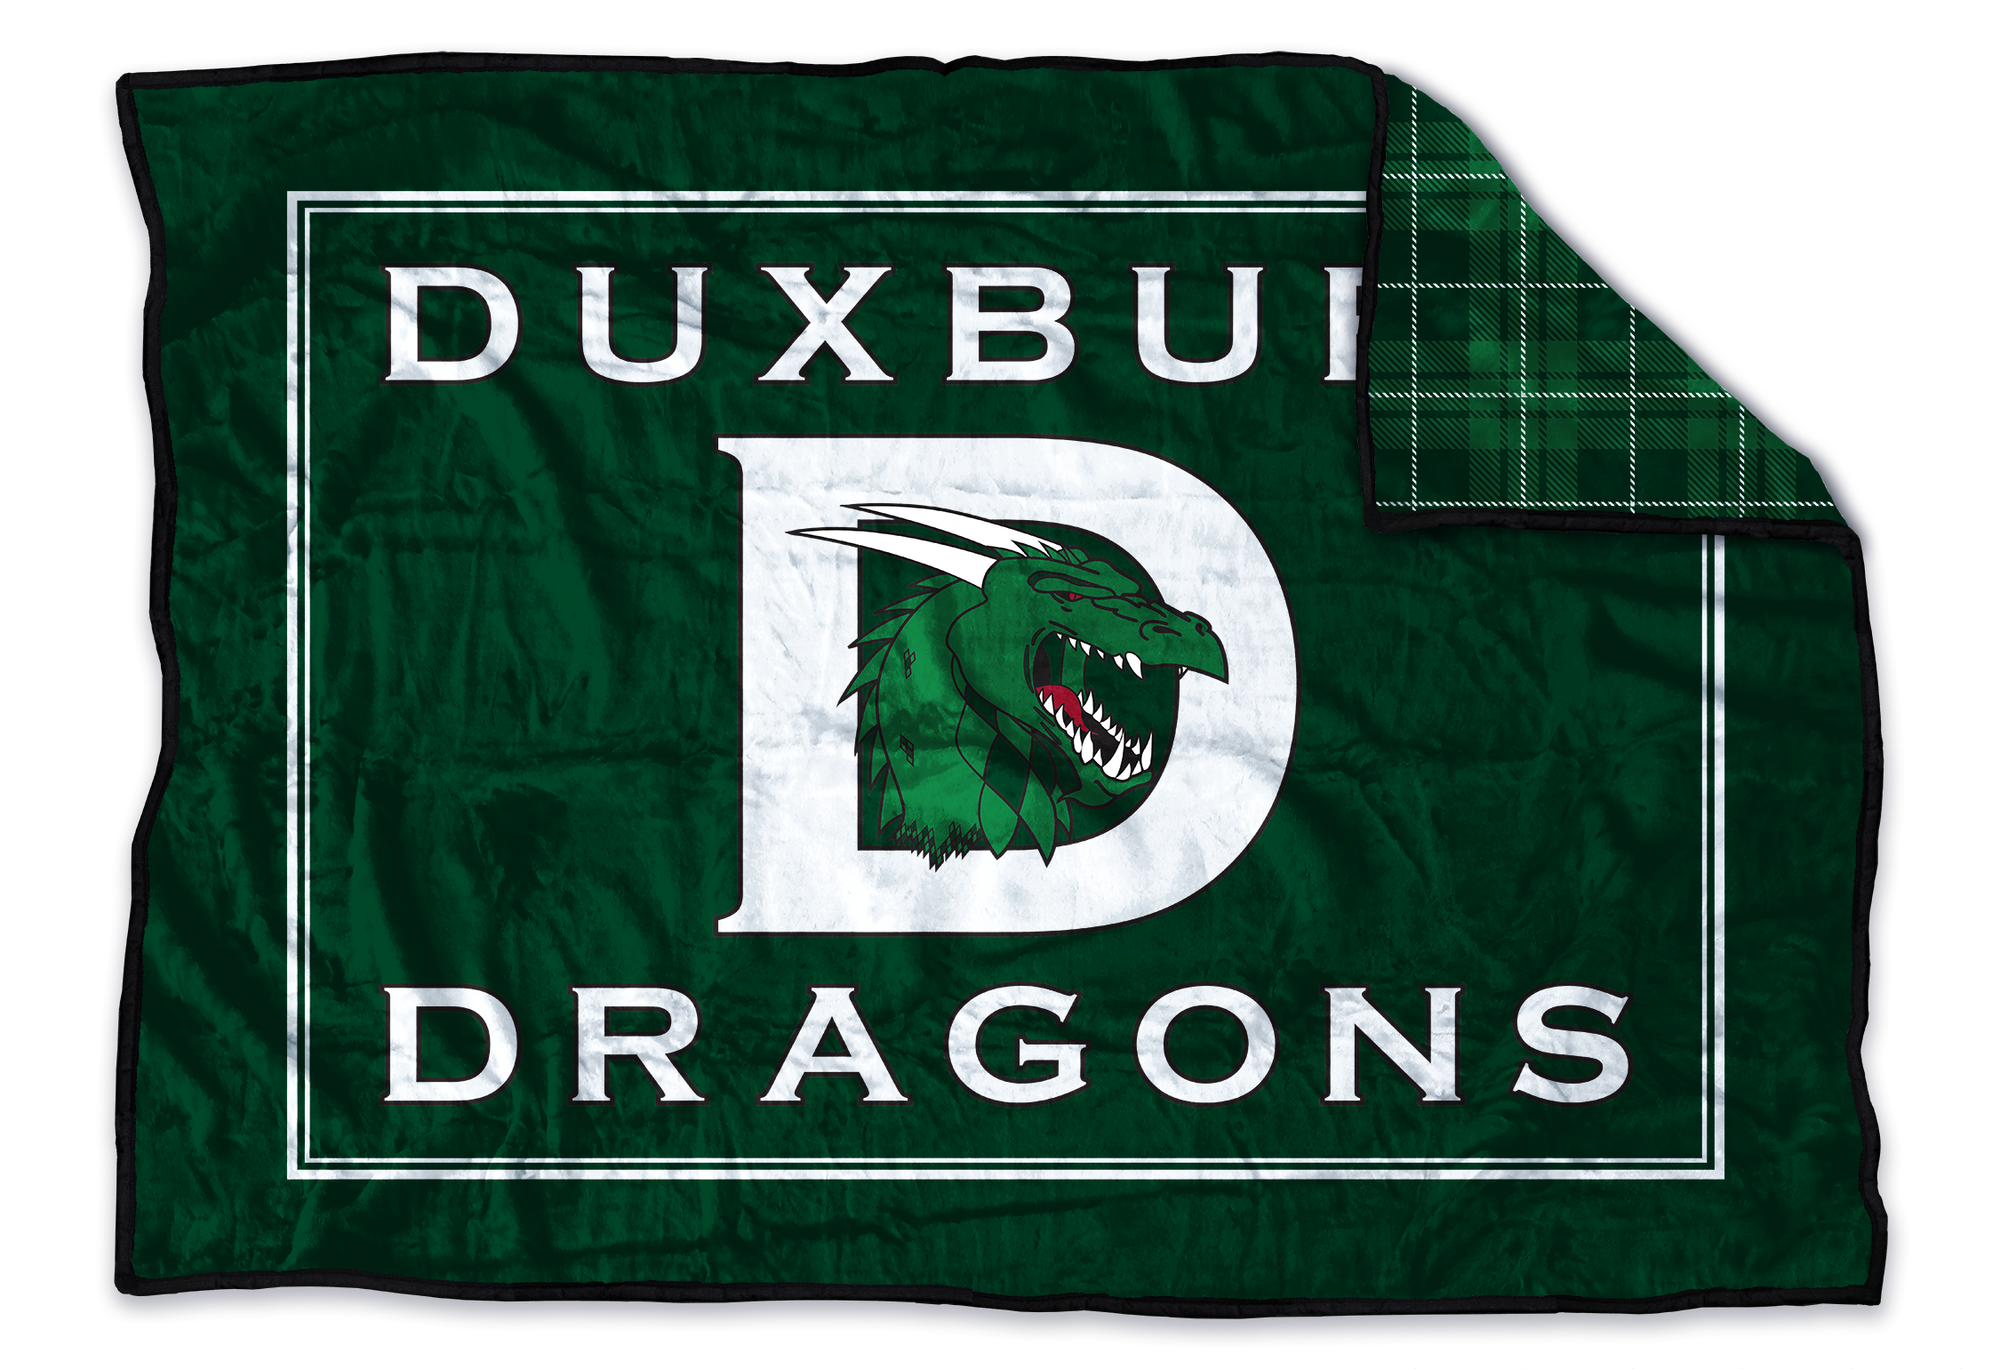 Duxbury Dragons